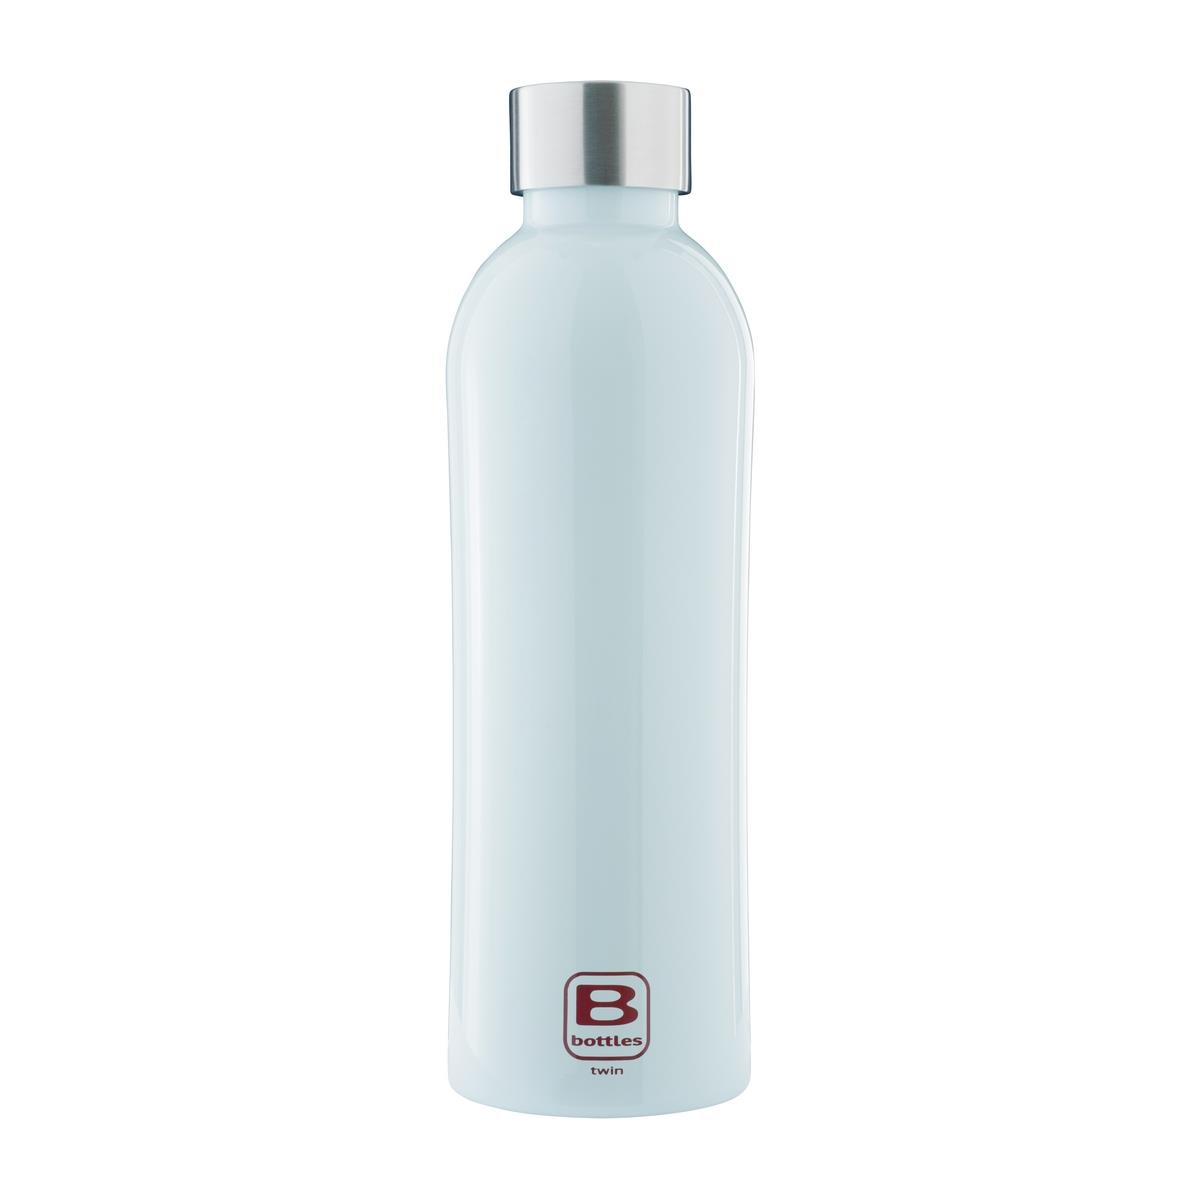 B Bottles Twin - Light Blue - 800 ml - Double wall thermal bottle in 18/10 stainless steel